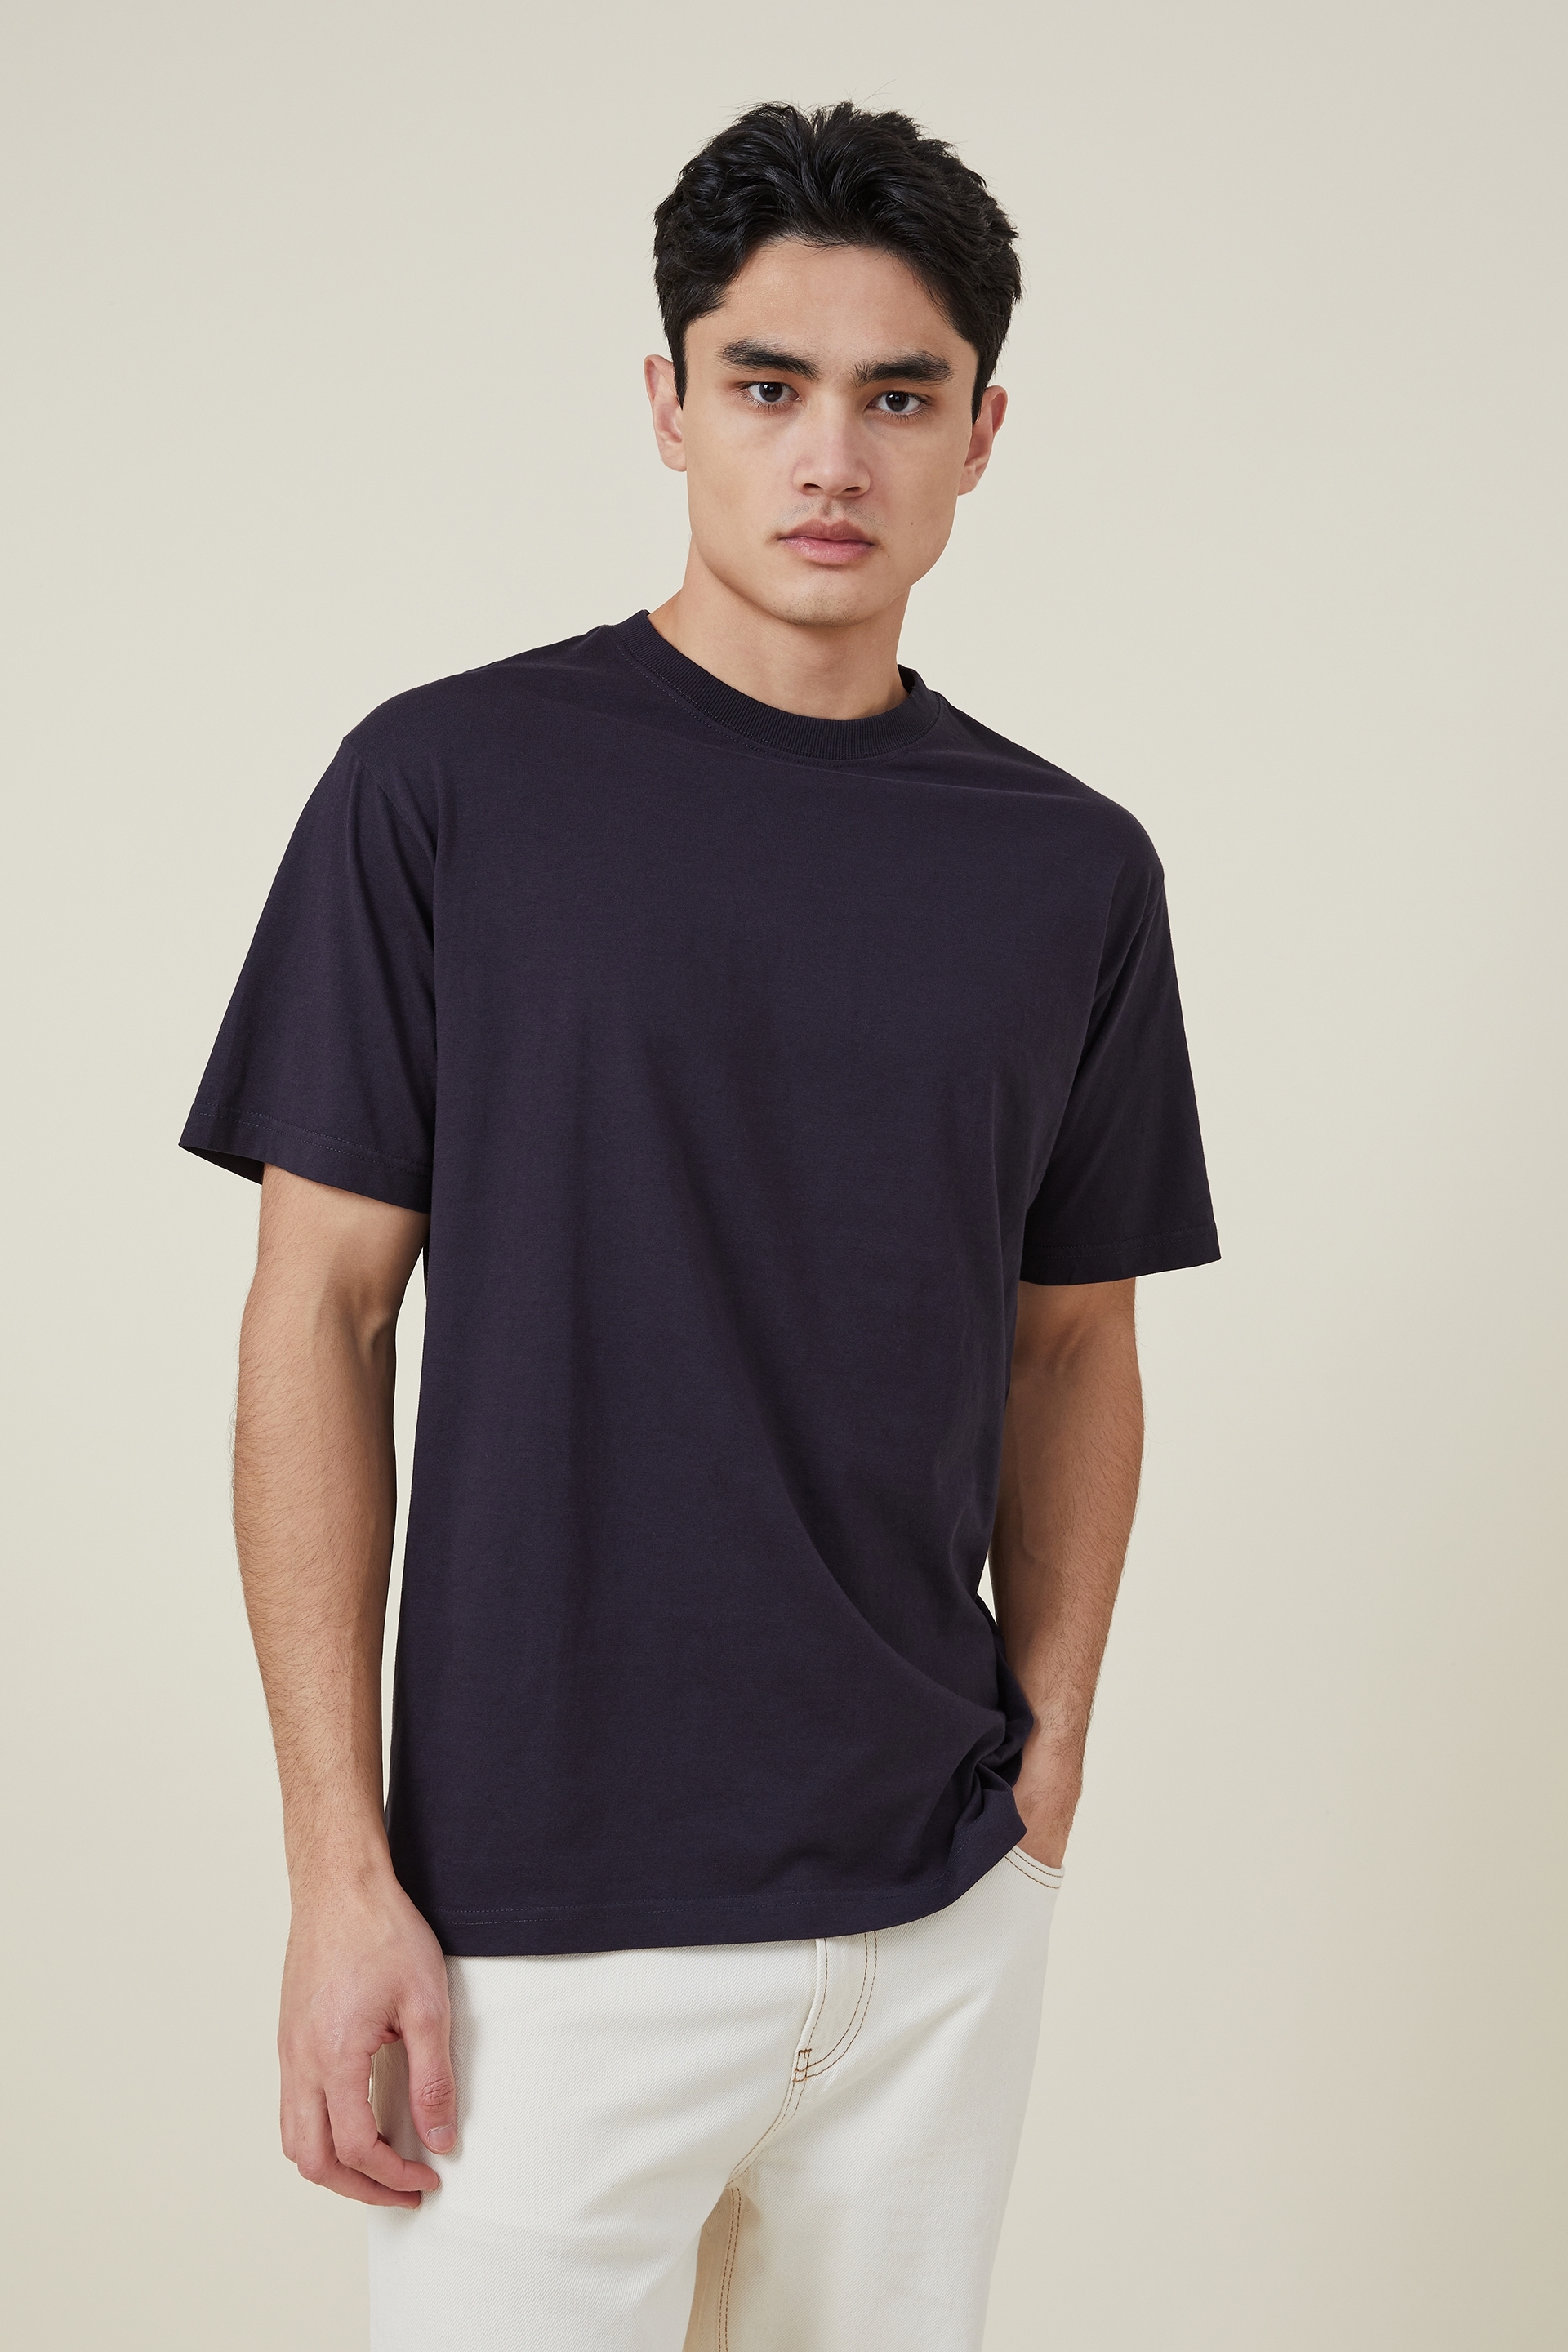 Cotton On Men - Organic Loose Fit T-Shirt - Ink navy